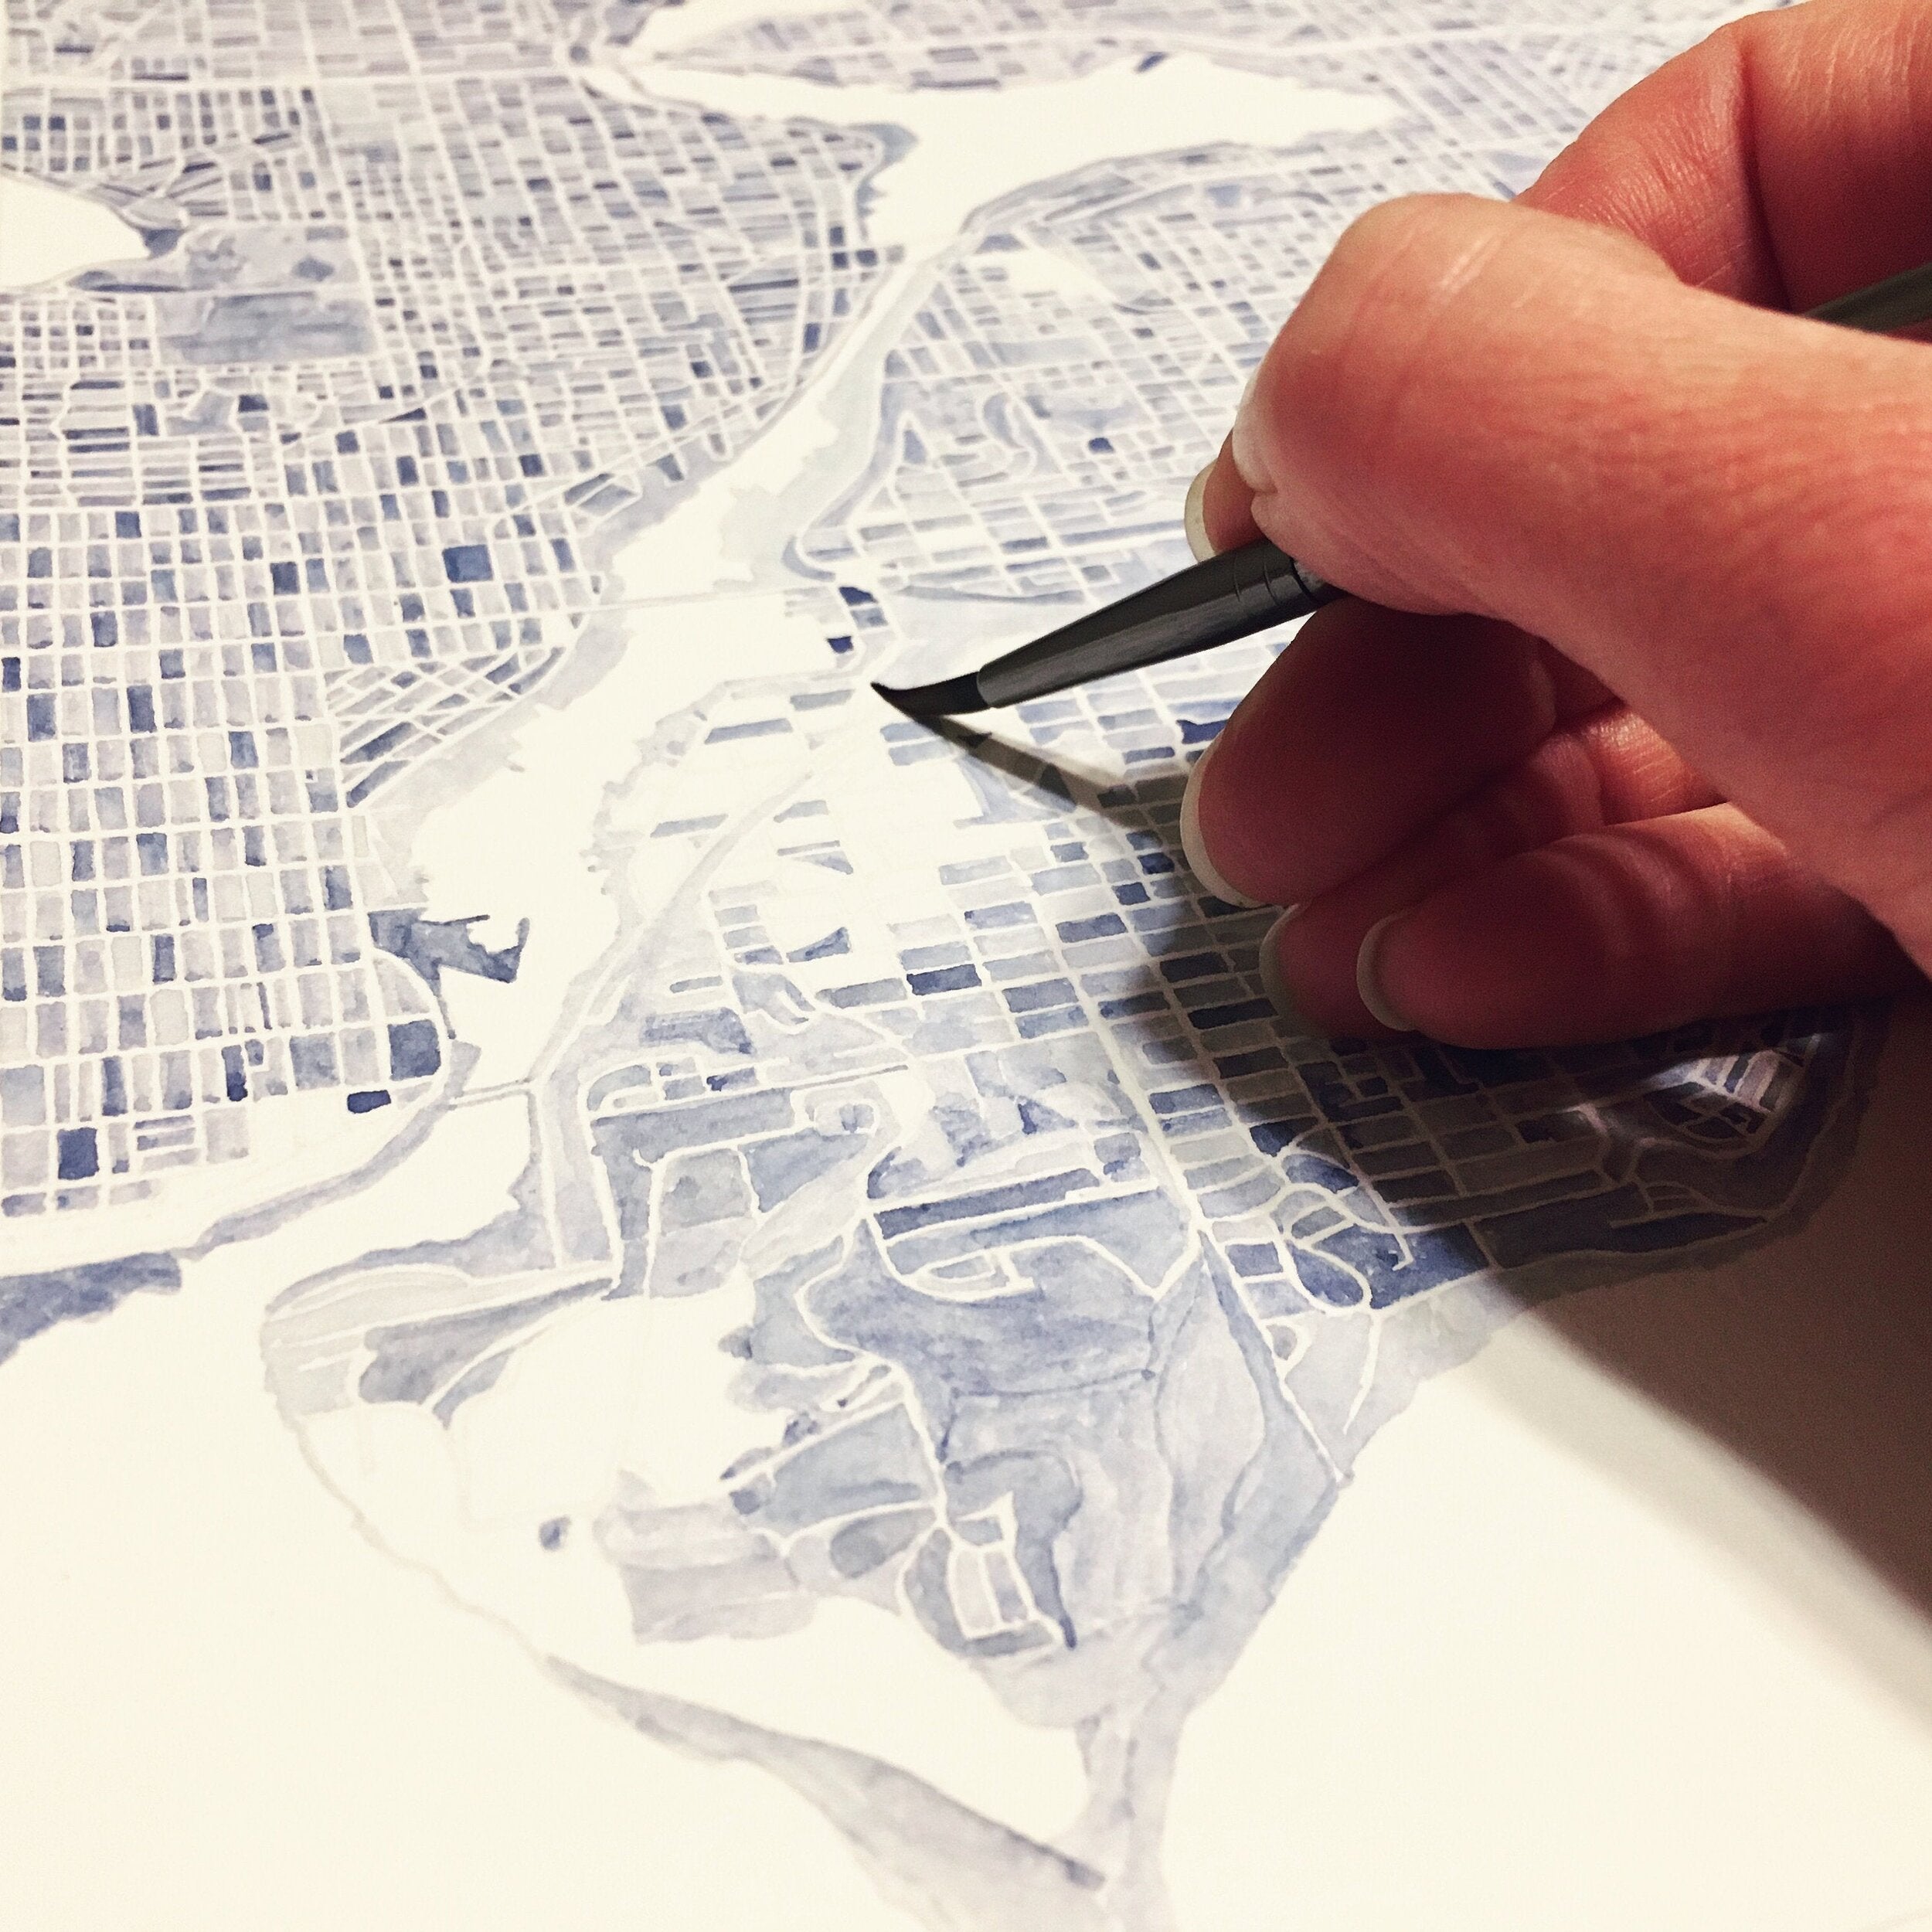 SEATTLE Watercolor City Blocks Map: ORIGINAL PAINTING (Commission)